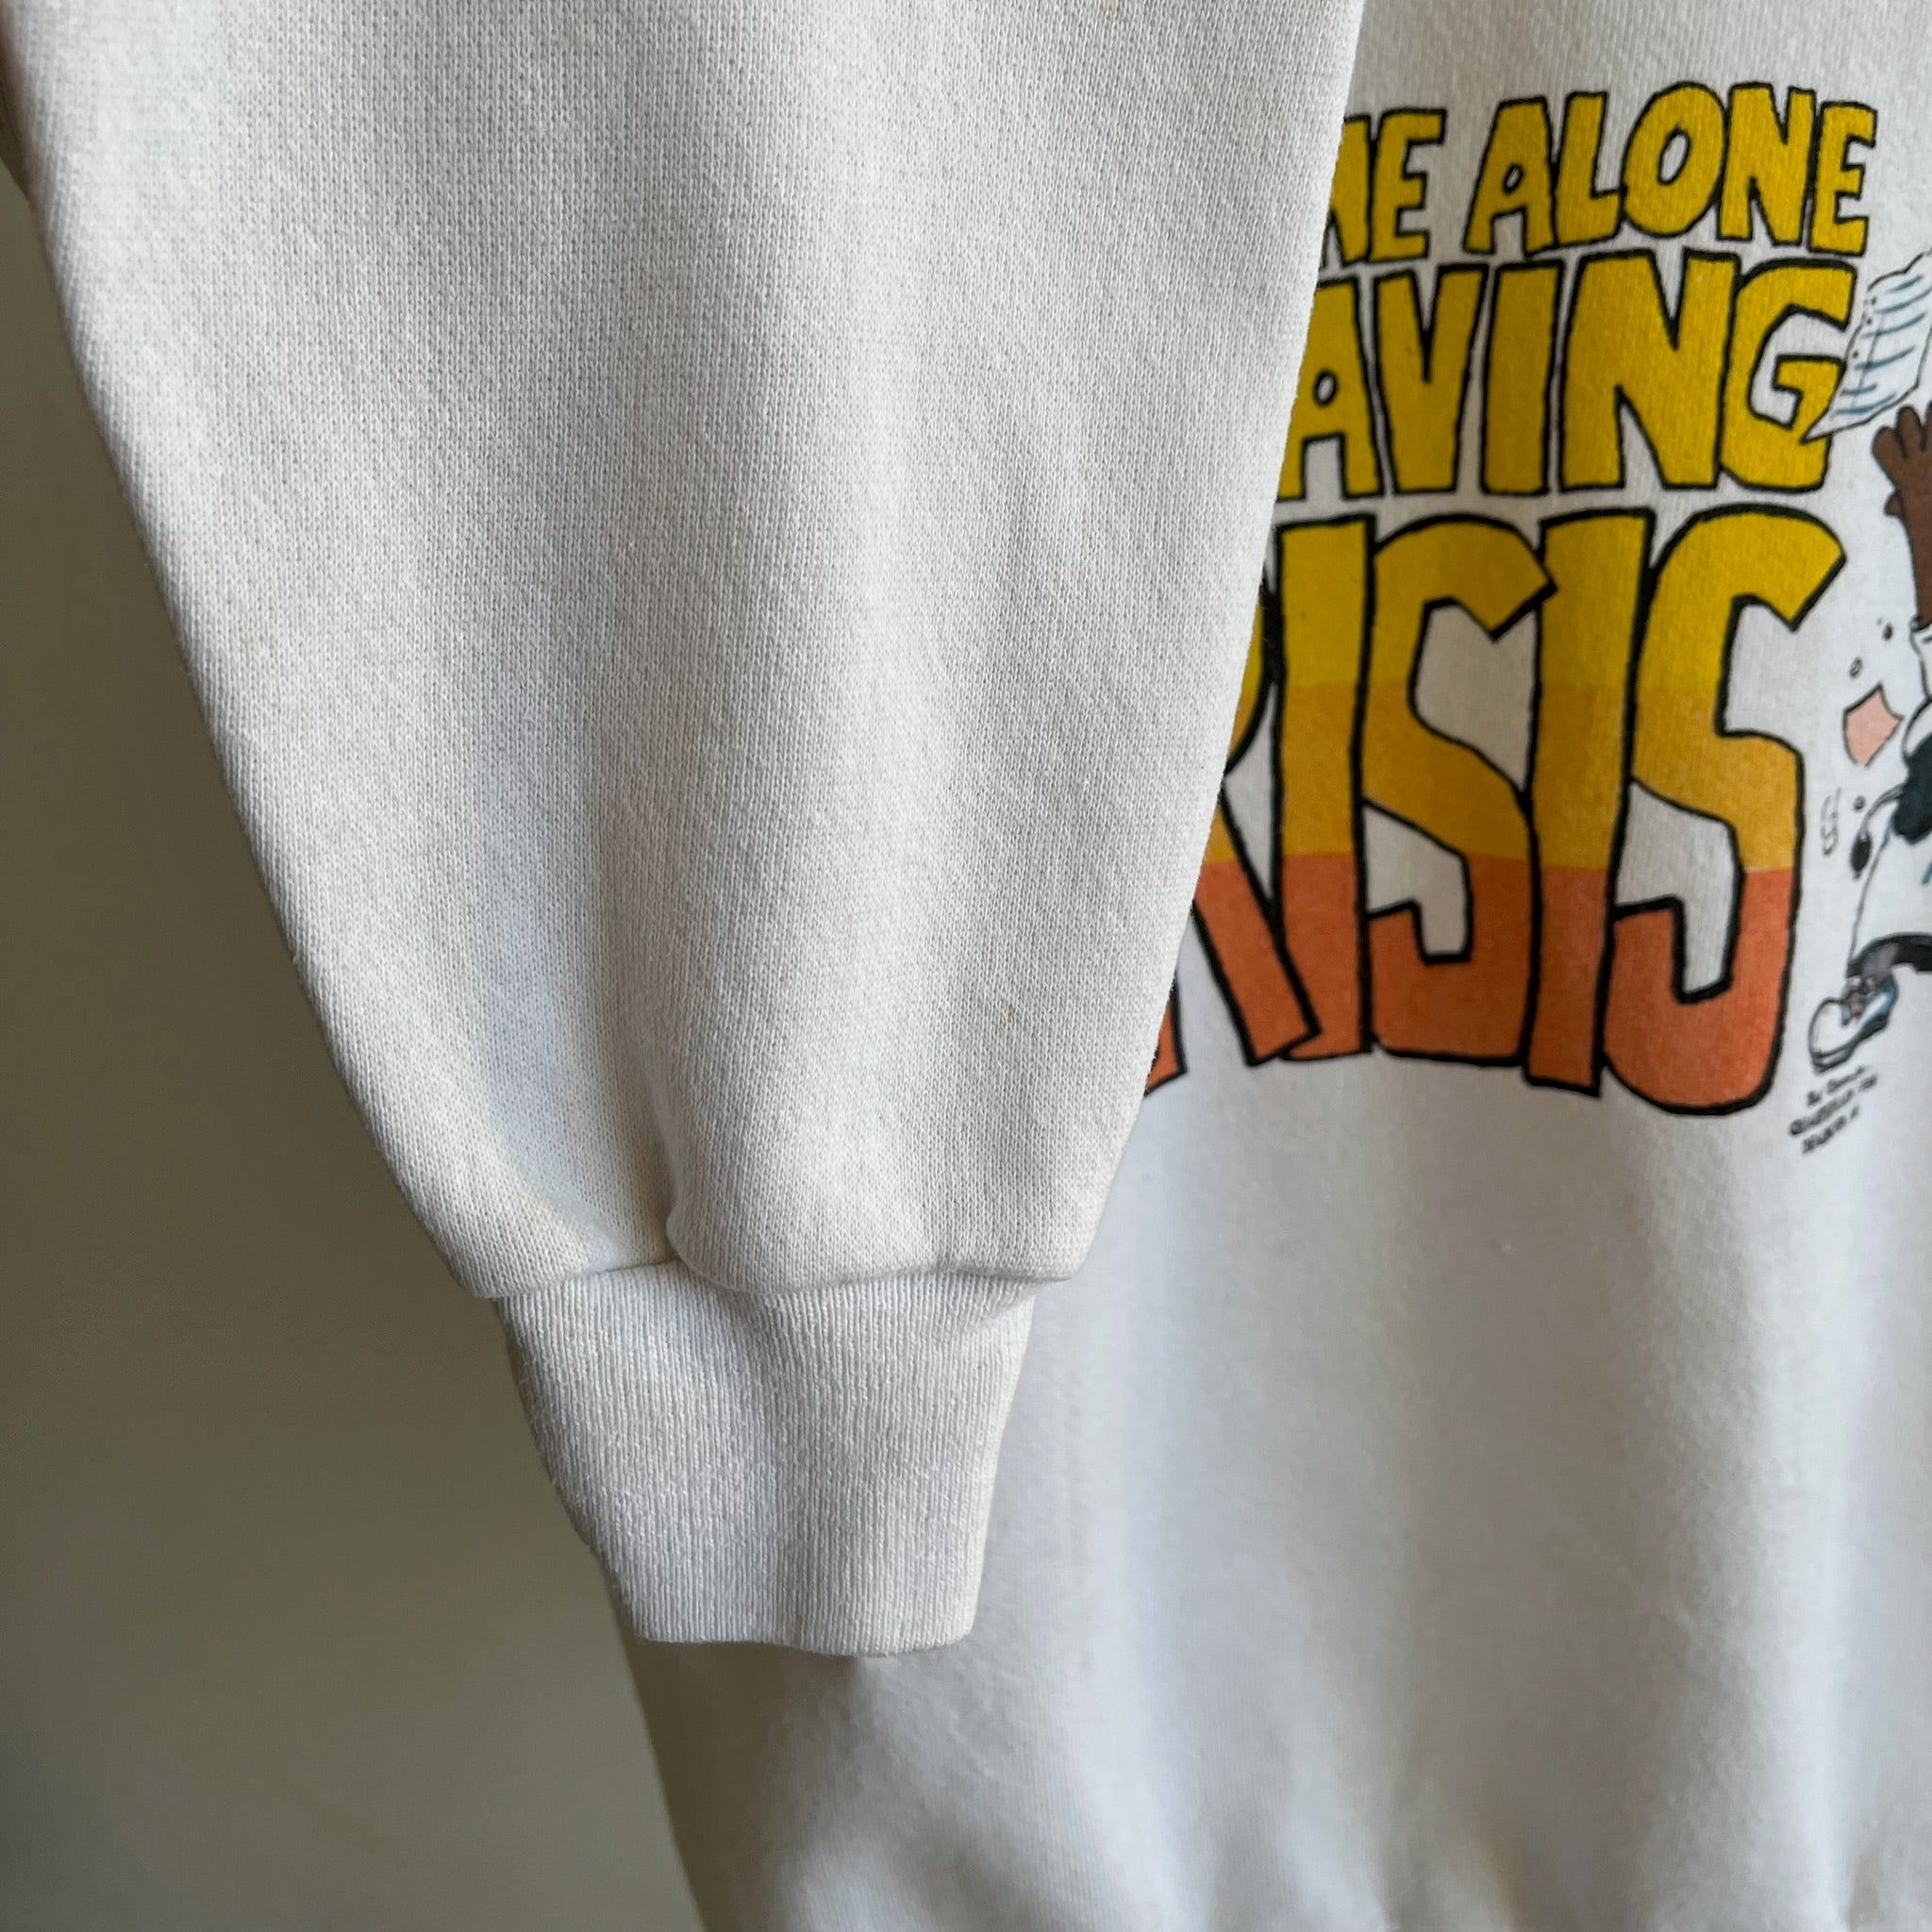 1989 Leave Me Alone I'm Having A Crisis Sweatshirt